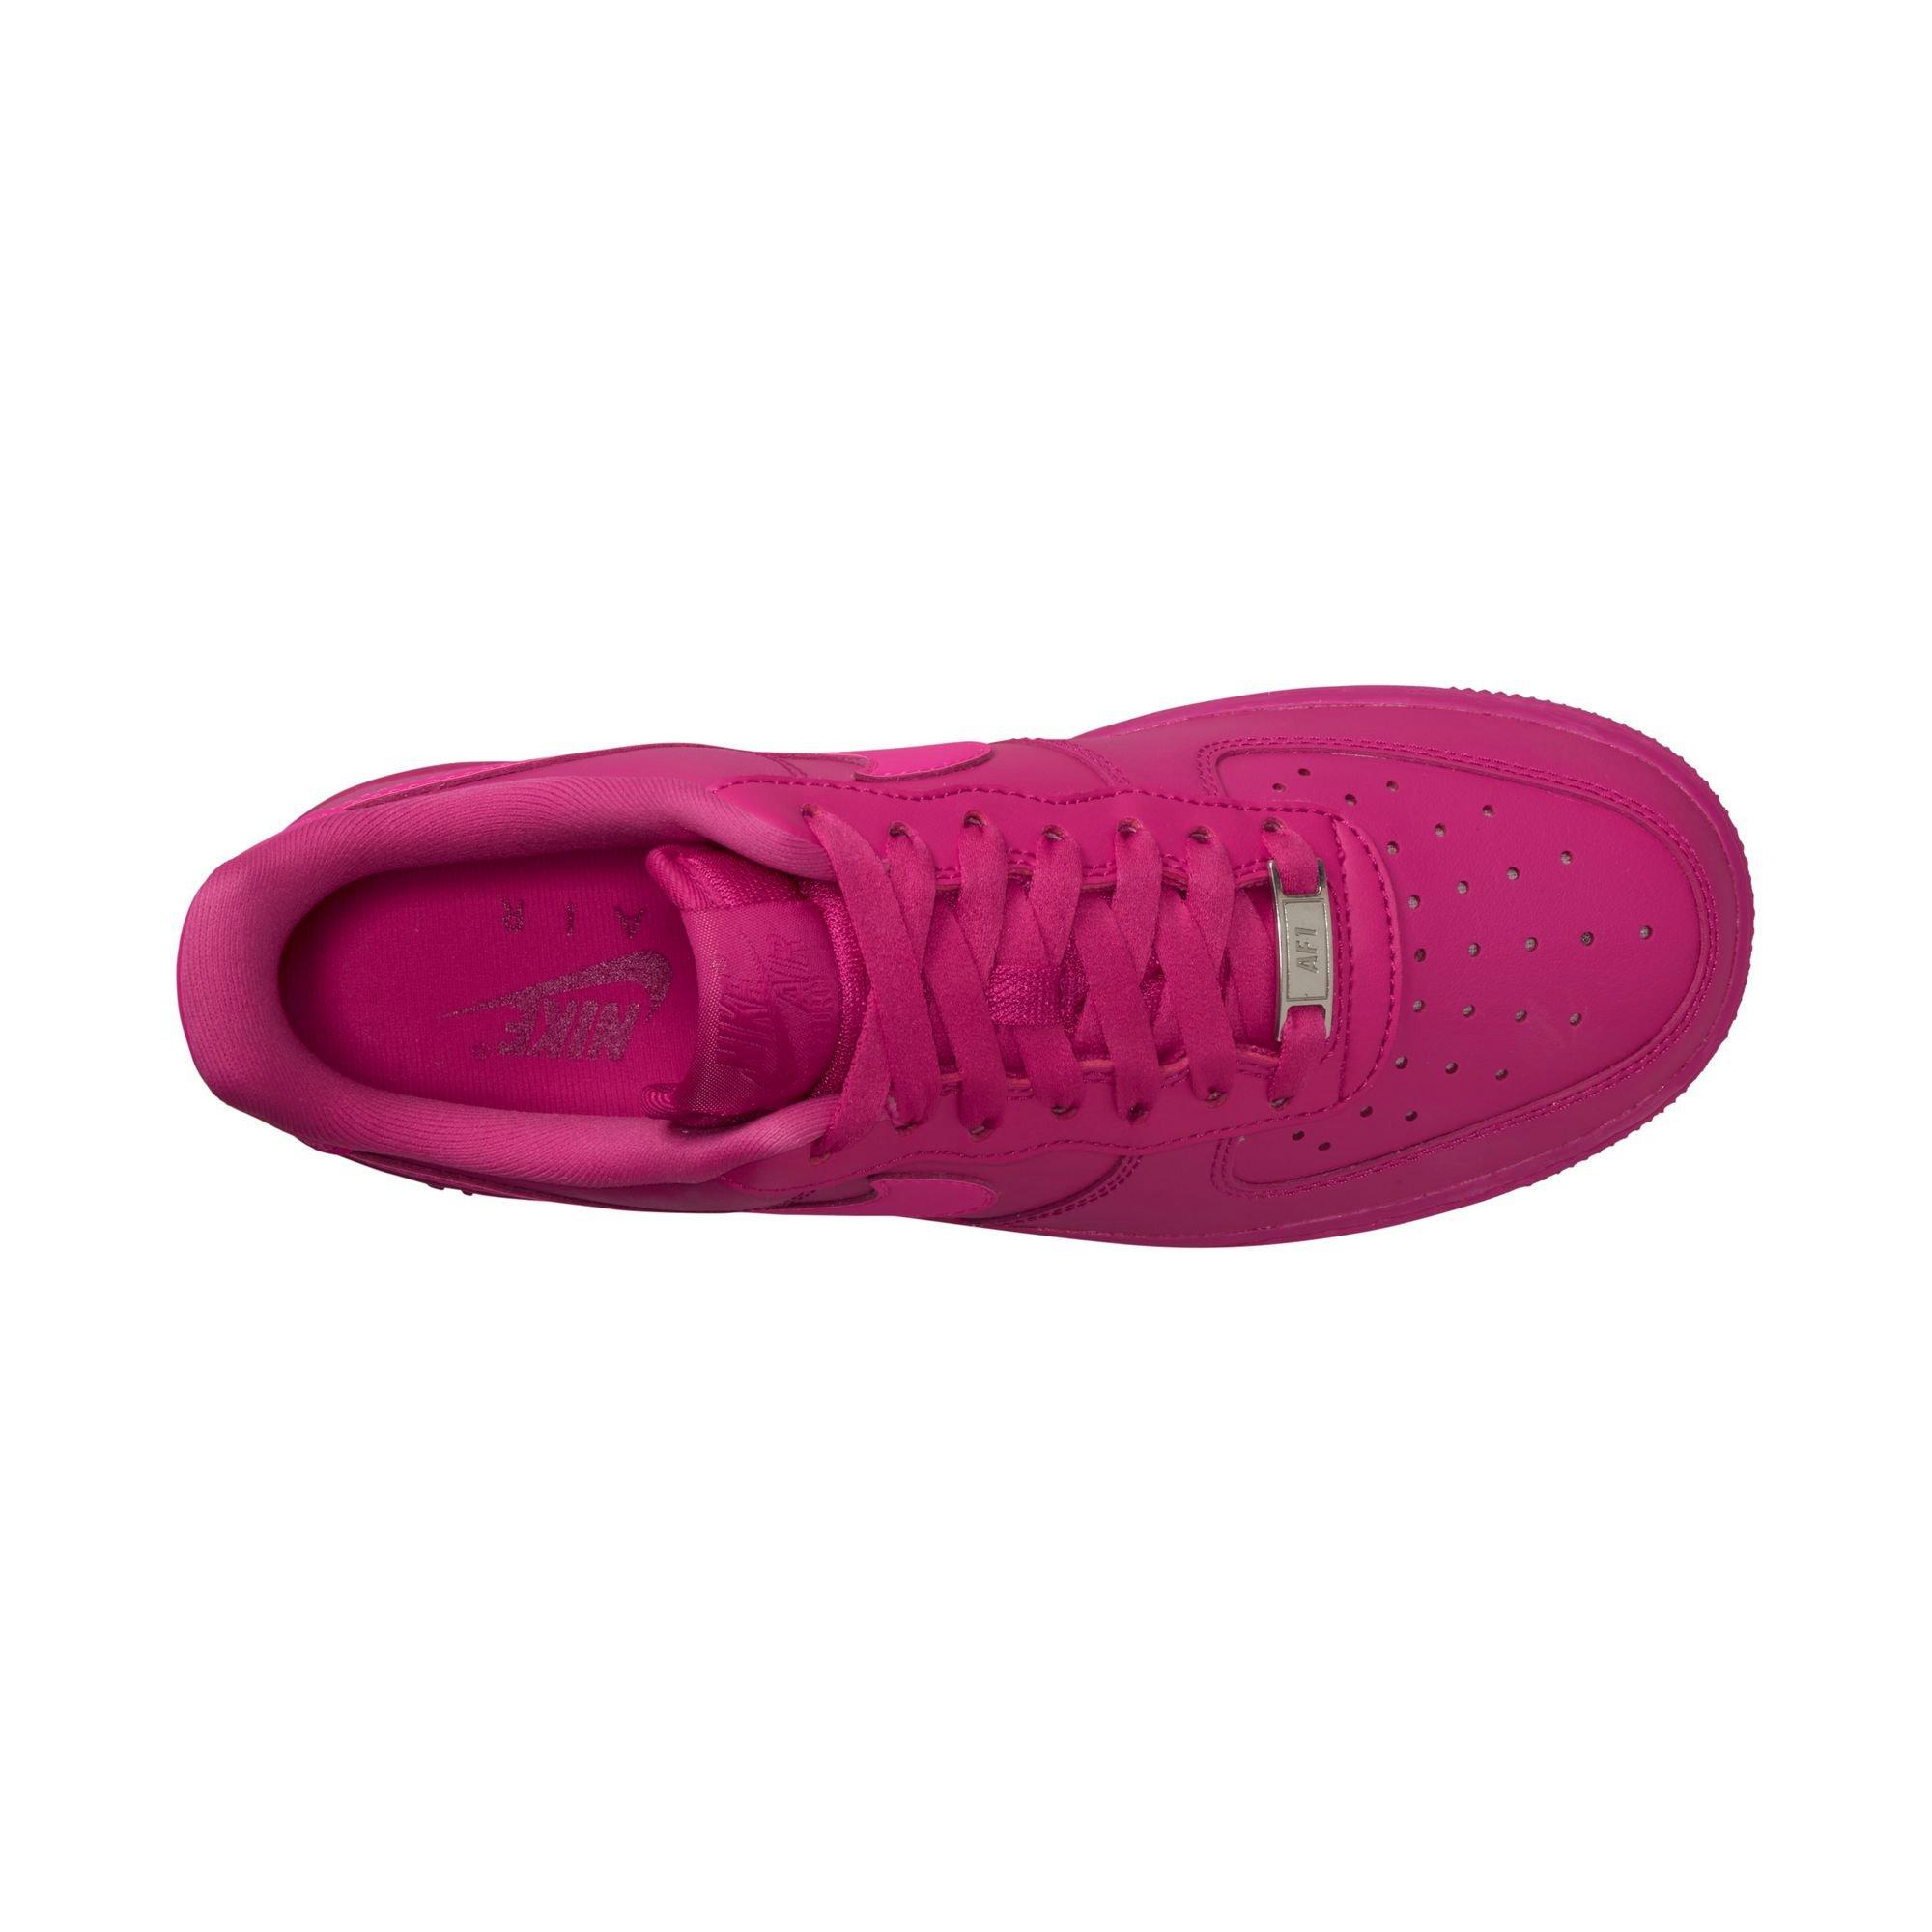 Nike Air Force 1 ' Low "Fireberry" Women's Shoe   Hibbett   City